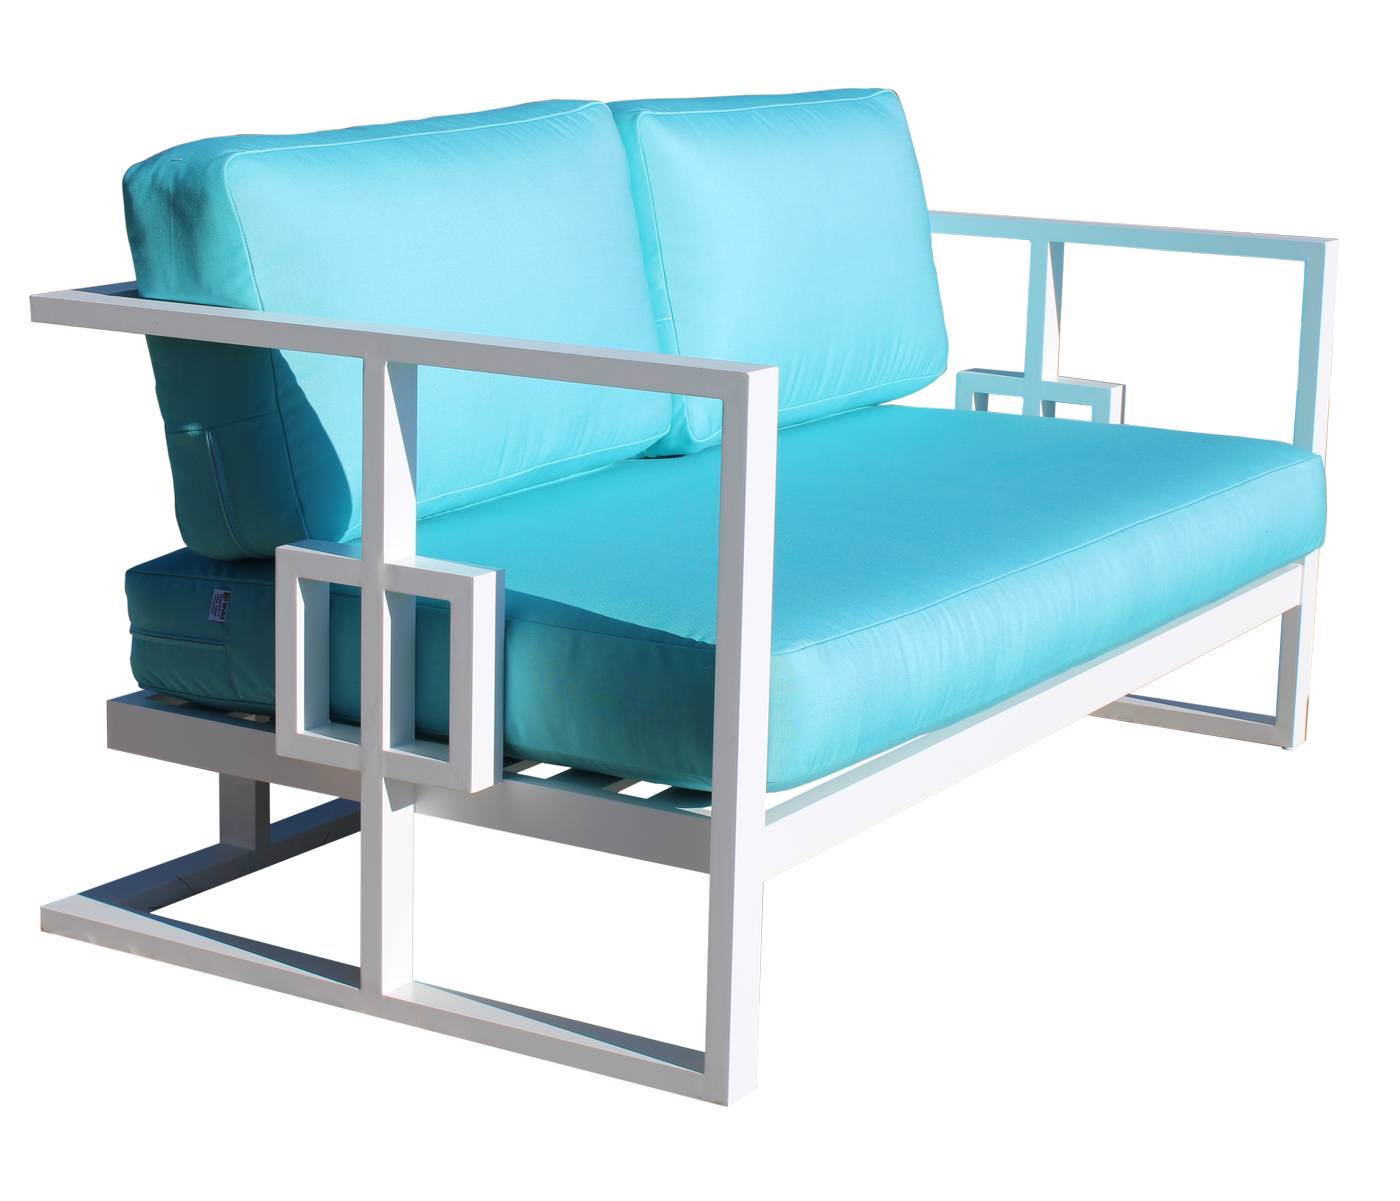 Set Aluminio Palermo-9 - Conjunto de aluminio: sofá de 2 plazas + 2 sillones + 1 mesa de centro + 2 reposapiés. Disponible en color blanco, antracita, marrón, champagne o plata.